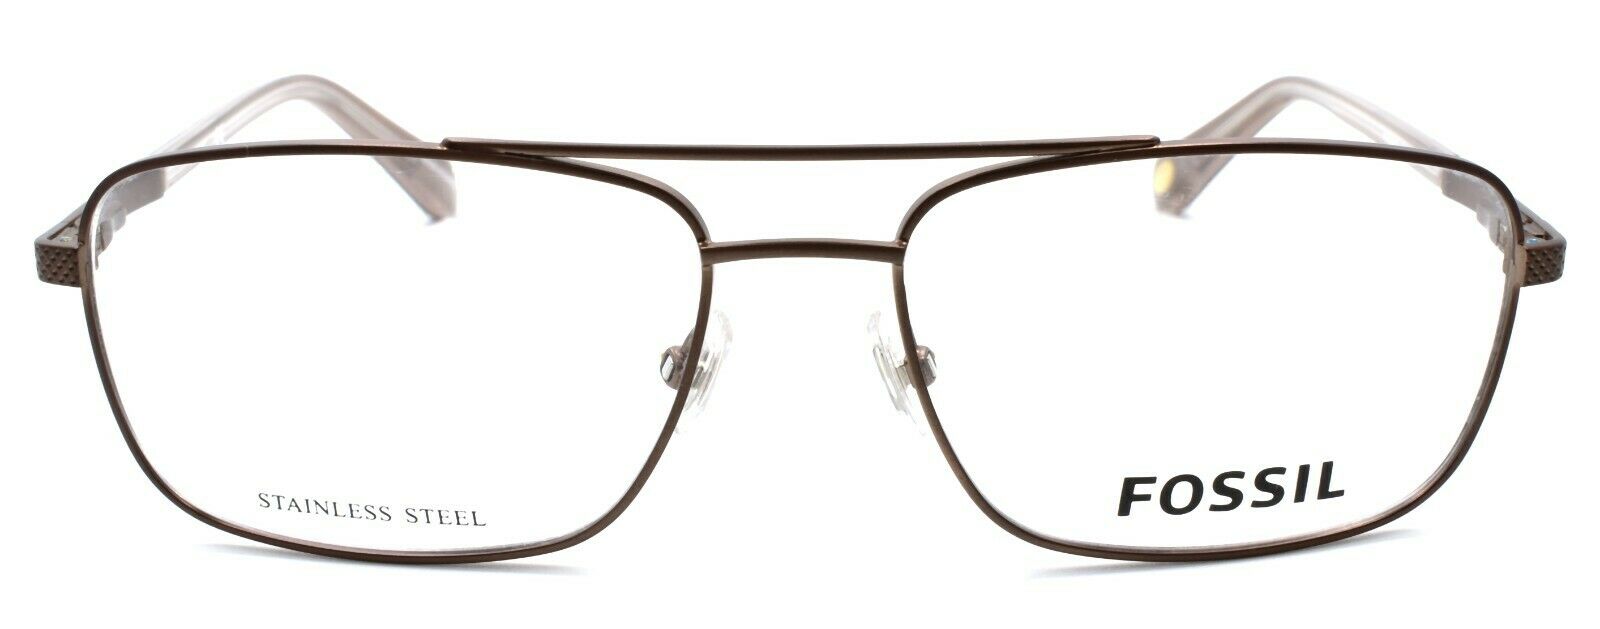 2-Fossil FOS 6060 OKL Men's Eyeglasses Frames Aviator 56-16-140 Brushed Bronze-762753317131-IKSpecs